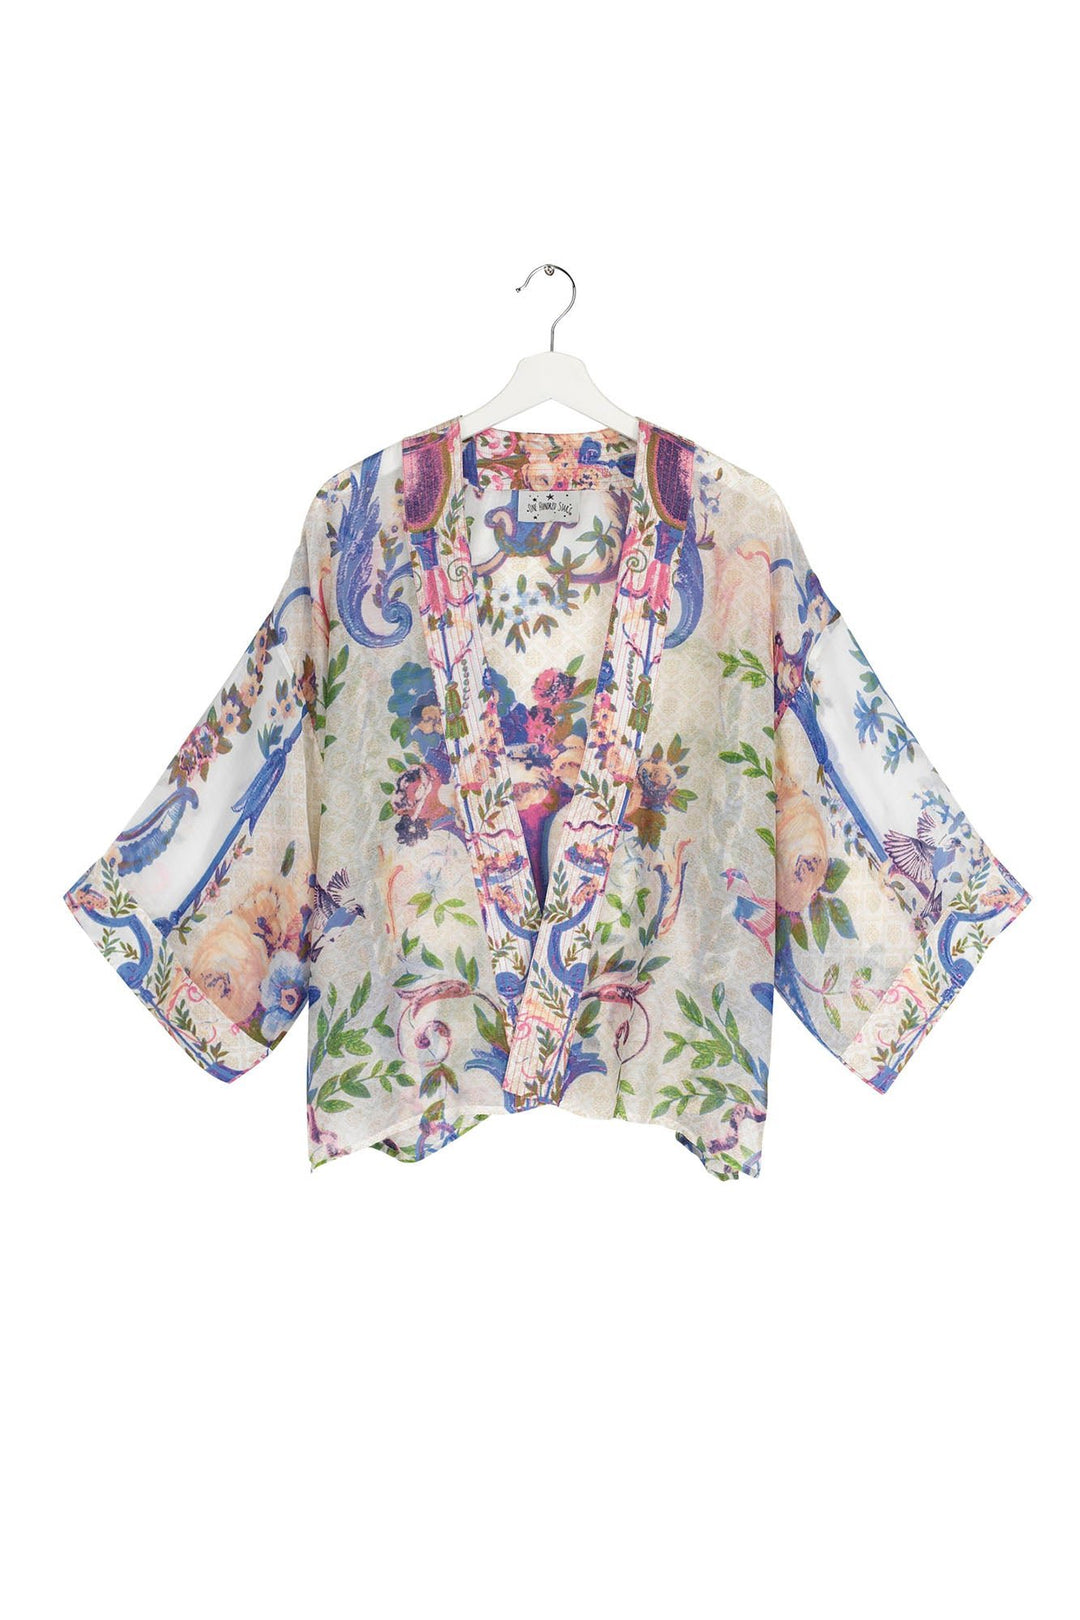 Opulent Pastel Kimono - One Hundred Stars